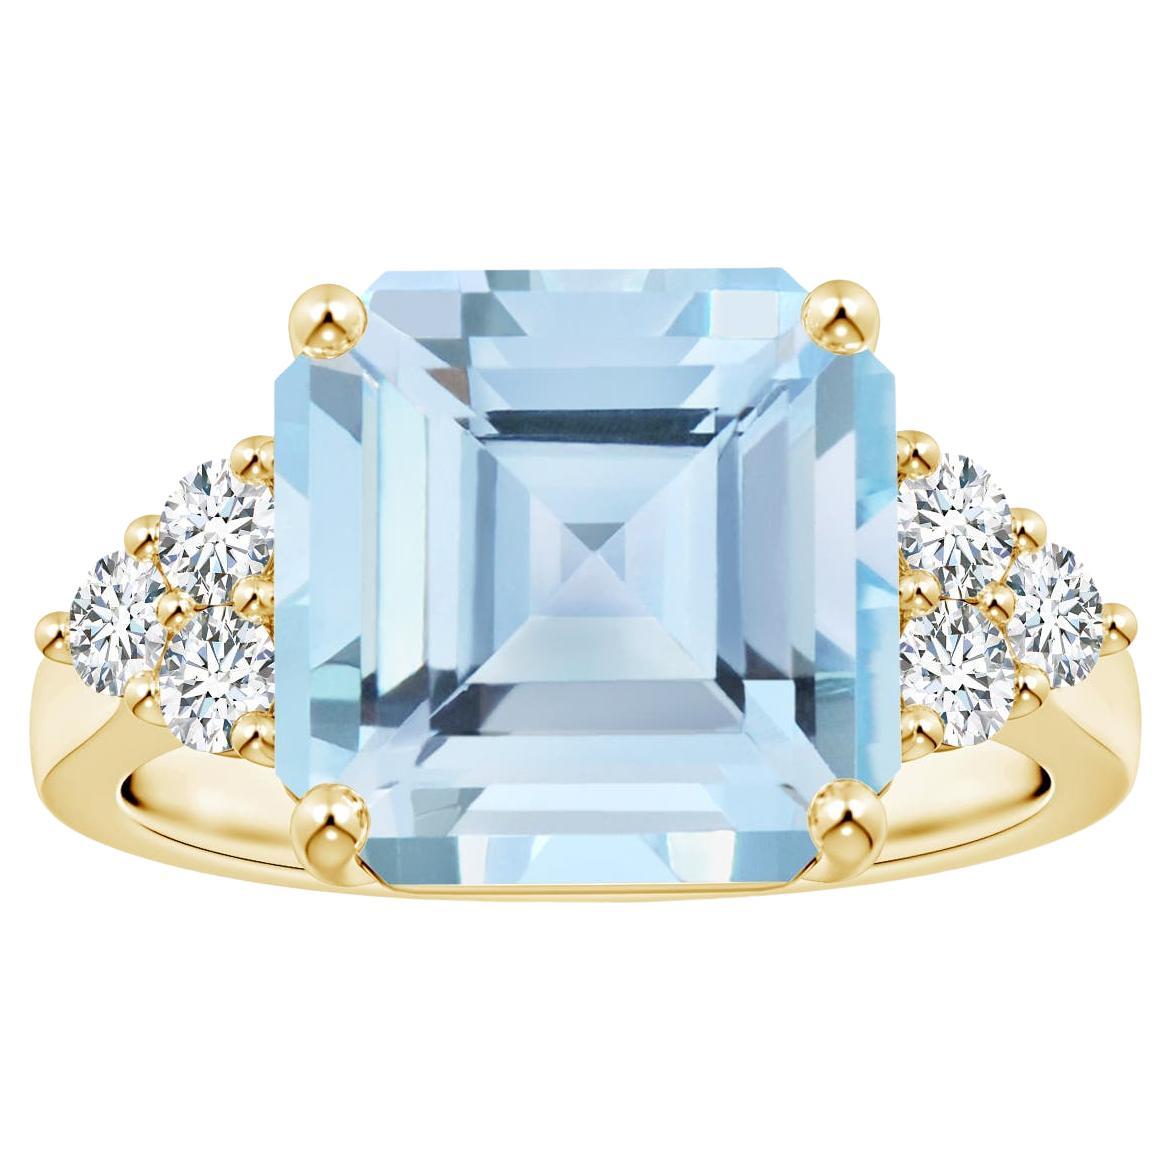 For Sale:  Angara Gia Certified Square Emerald-Cut Aquamarine Diamond Ring in Yellow Gold